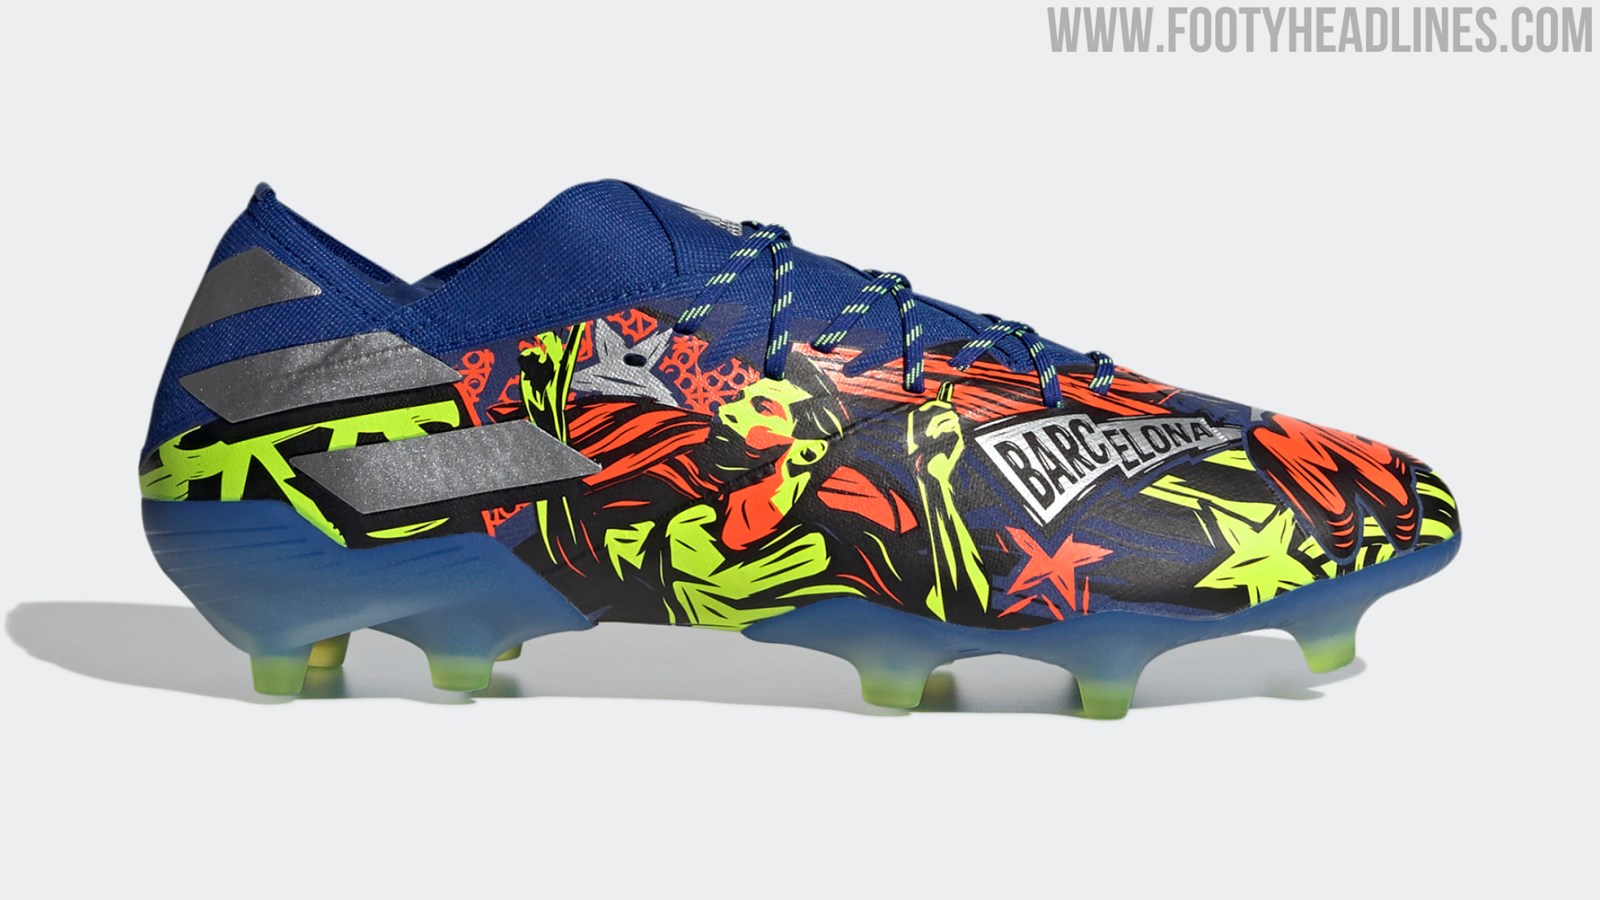 Adidas Nemeziz 2020 'Copa' Boots Released - Inspired by Barcelona and Rosario - Footy Headlines